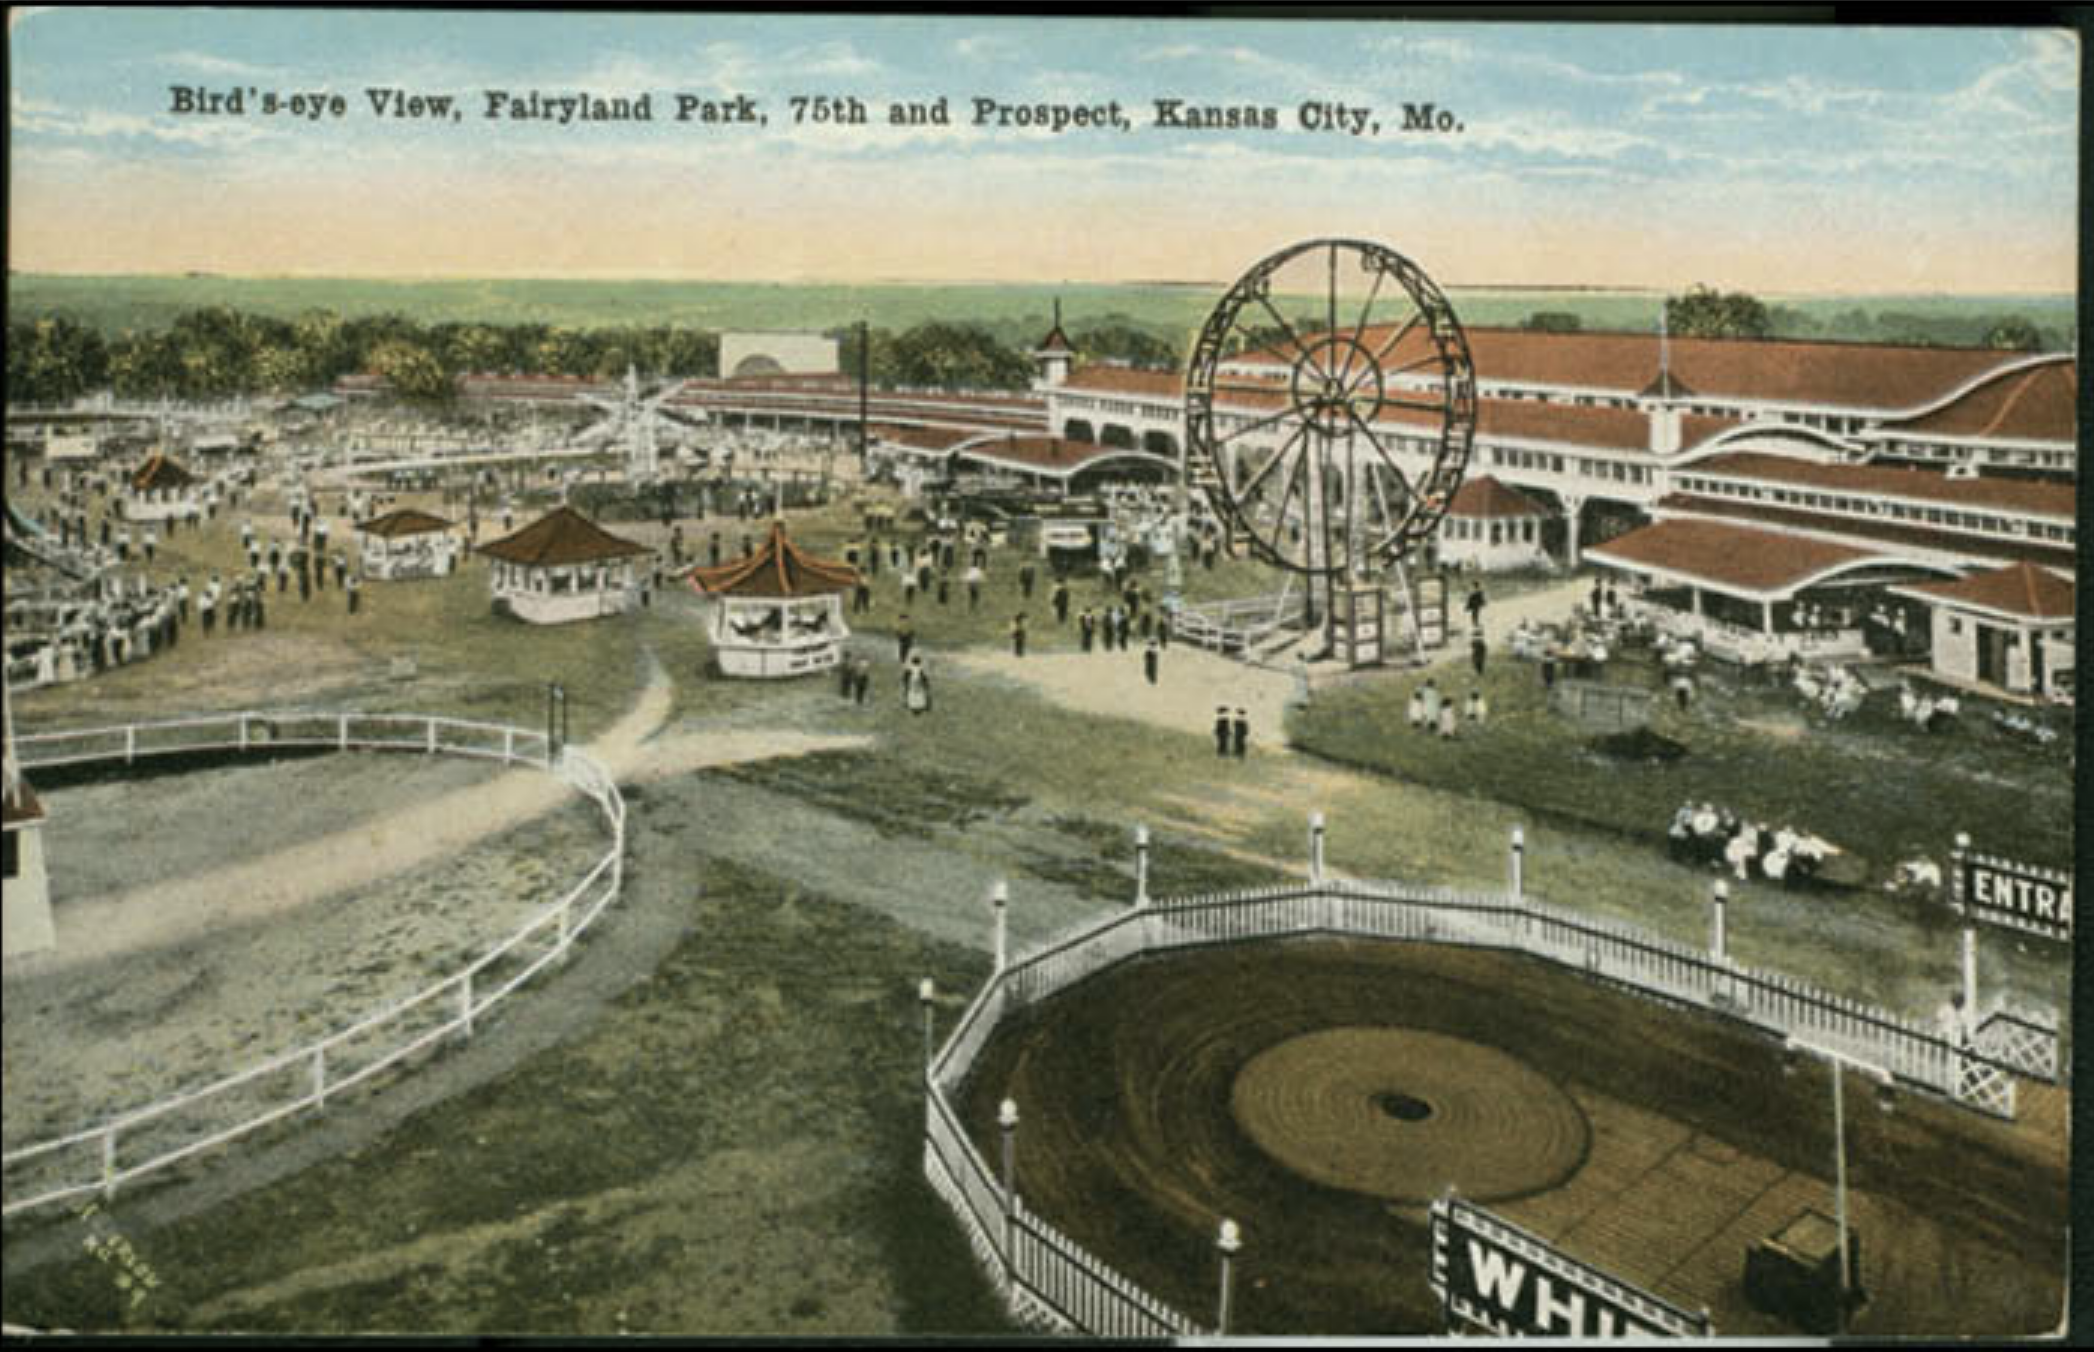 Fairyland Park: The working man's amusement park